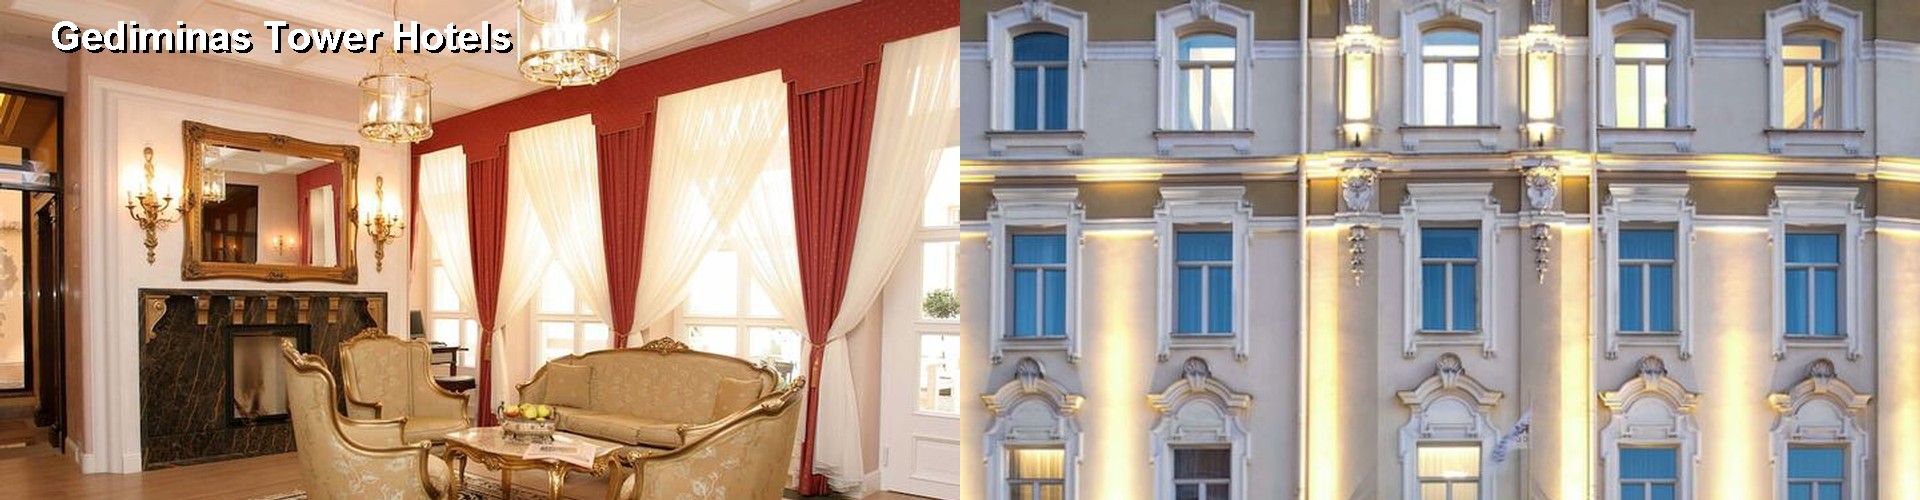 5 Best Hotels near Gediminas Tower